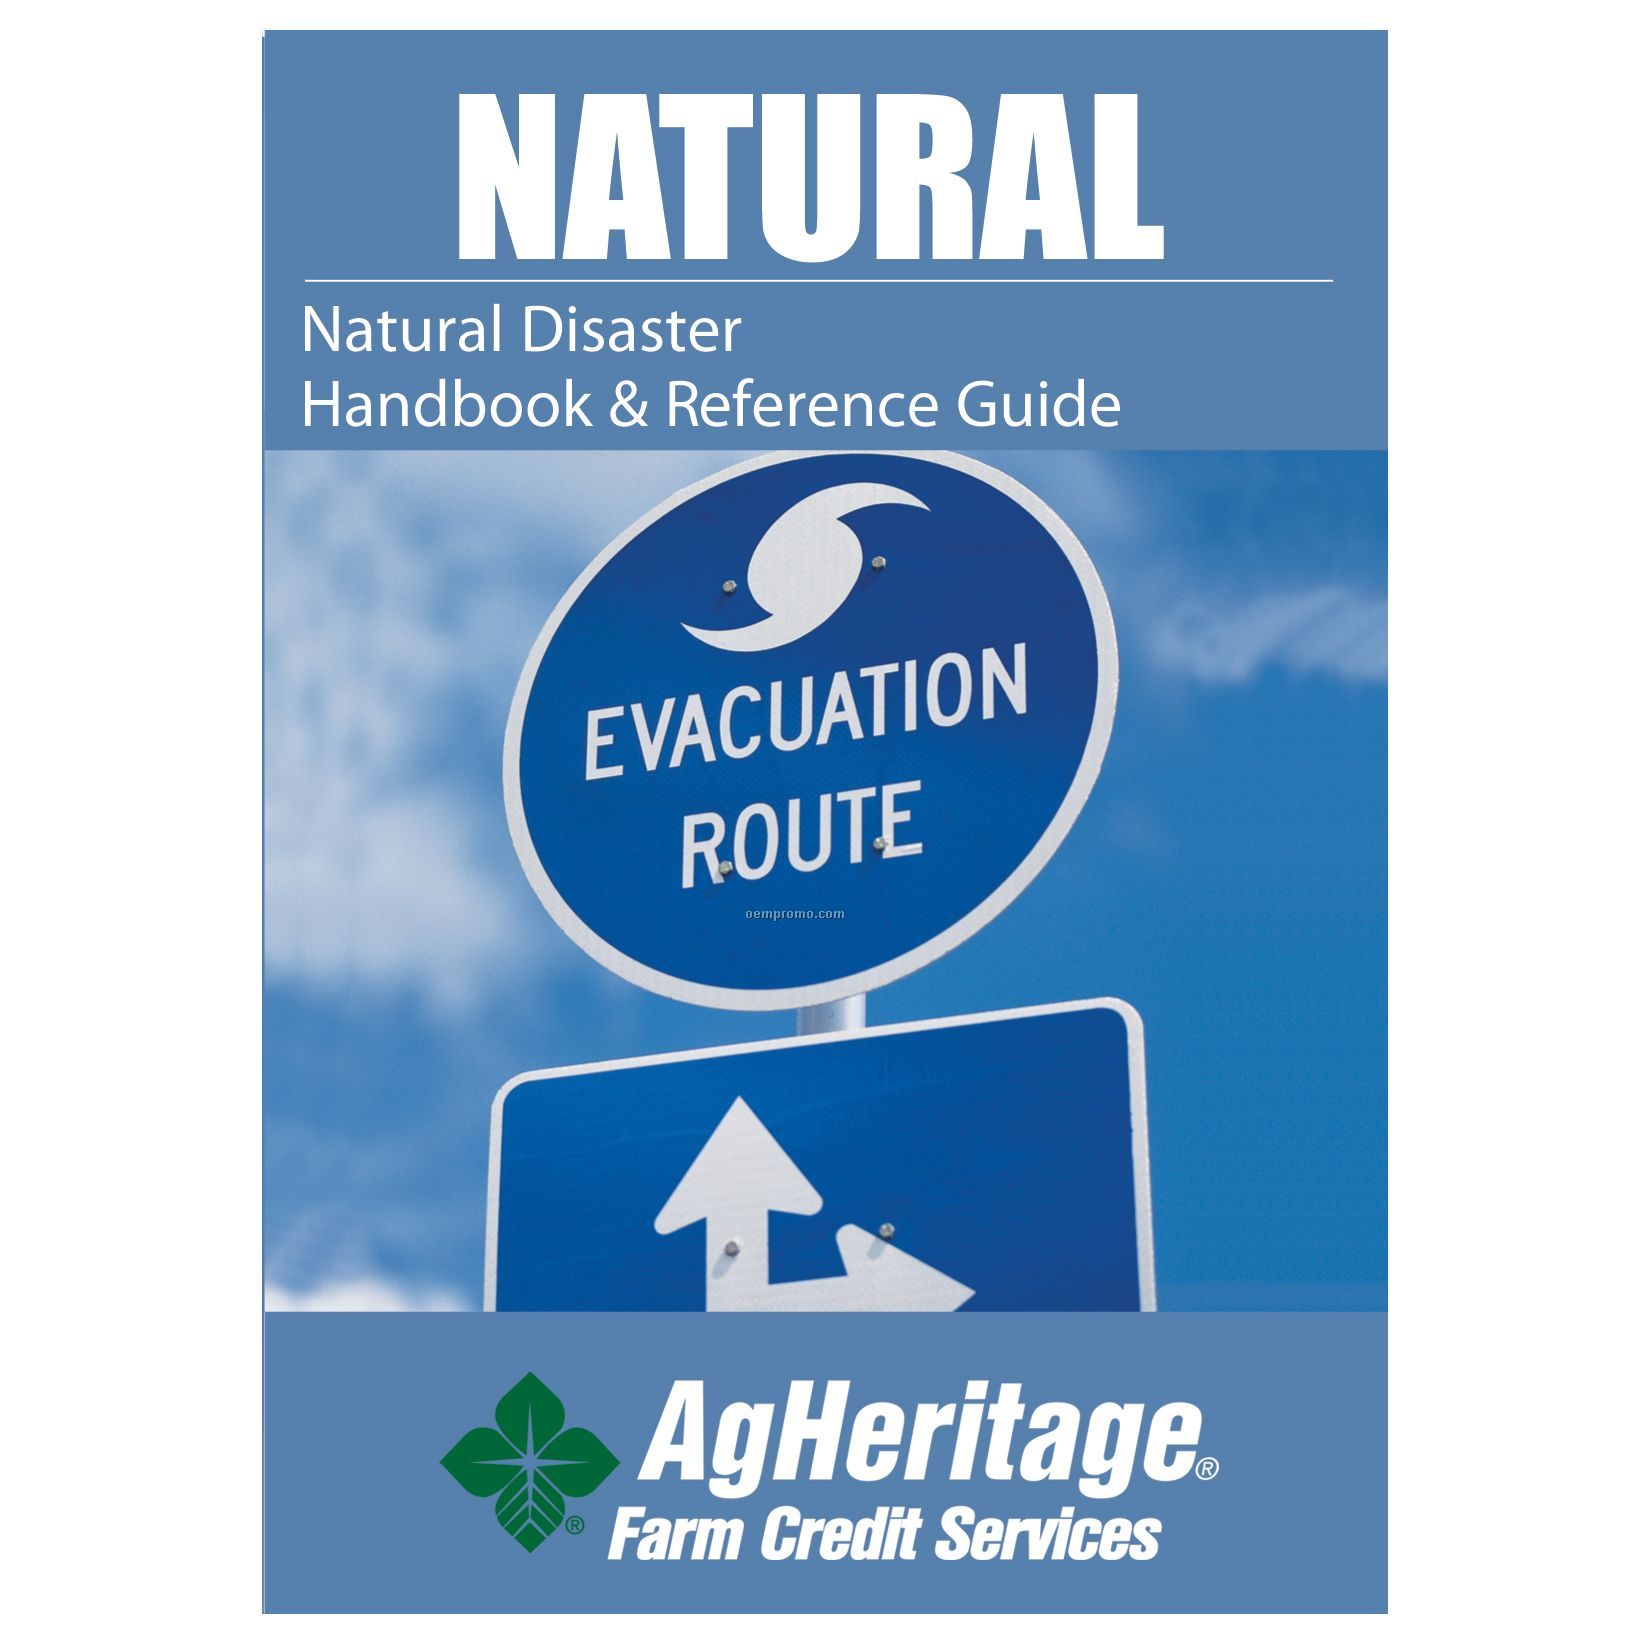 Natural Disaster Guide